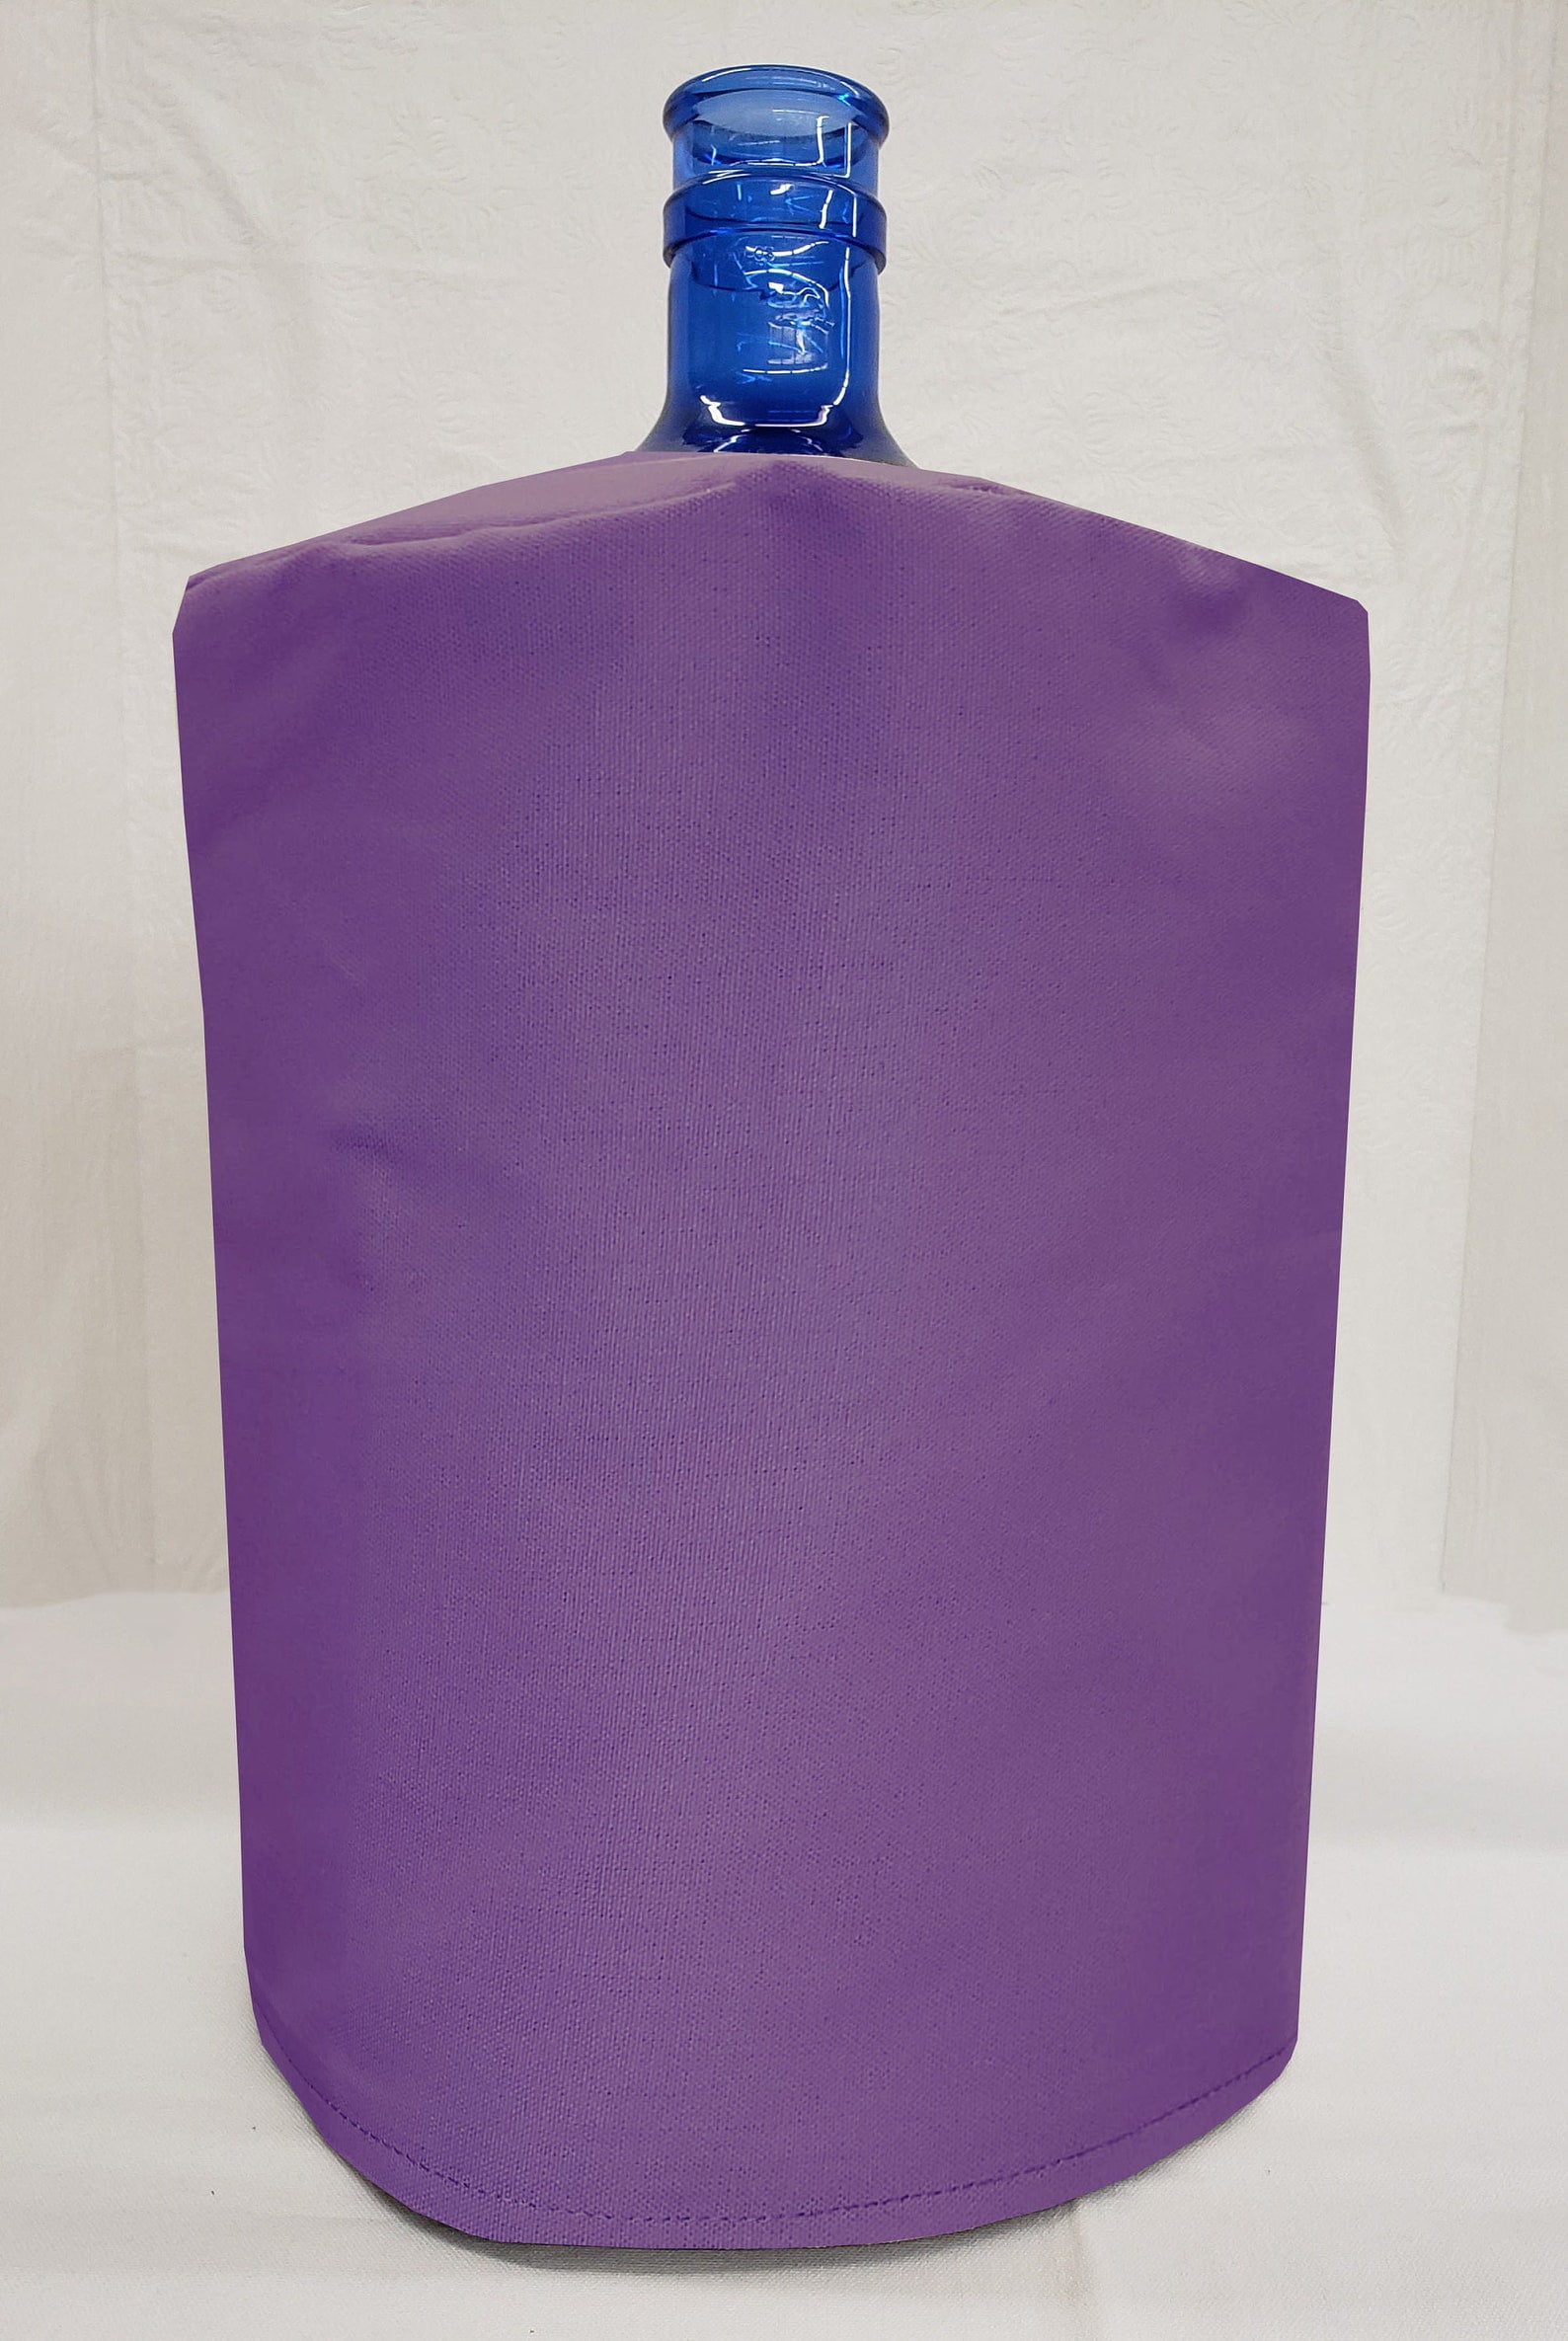 PEANUTS authorized 3 in 1 Water Bottle Family Set-3 pcs/set (Purple/Light  Blue) - Shop Me Too! Pitchers - Pinkoi